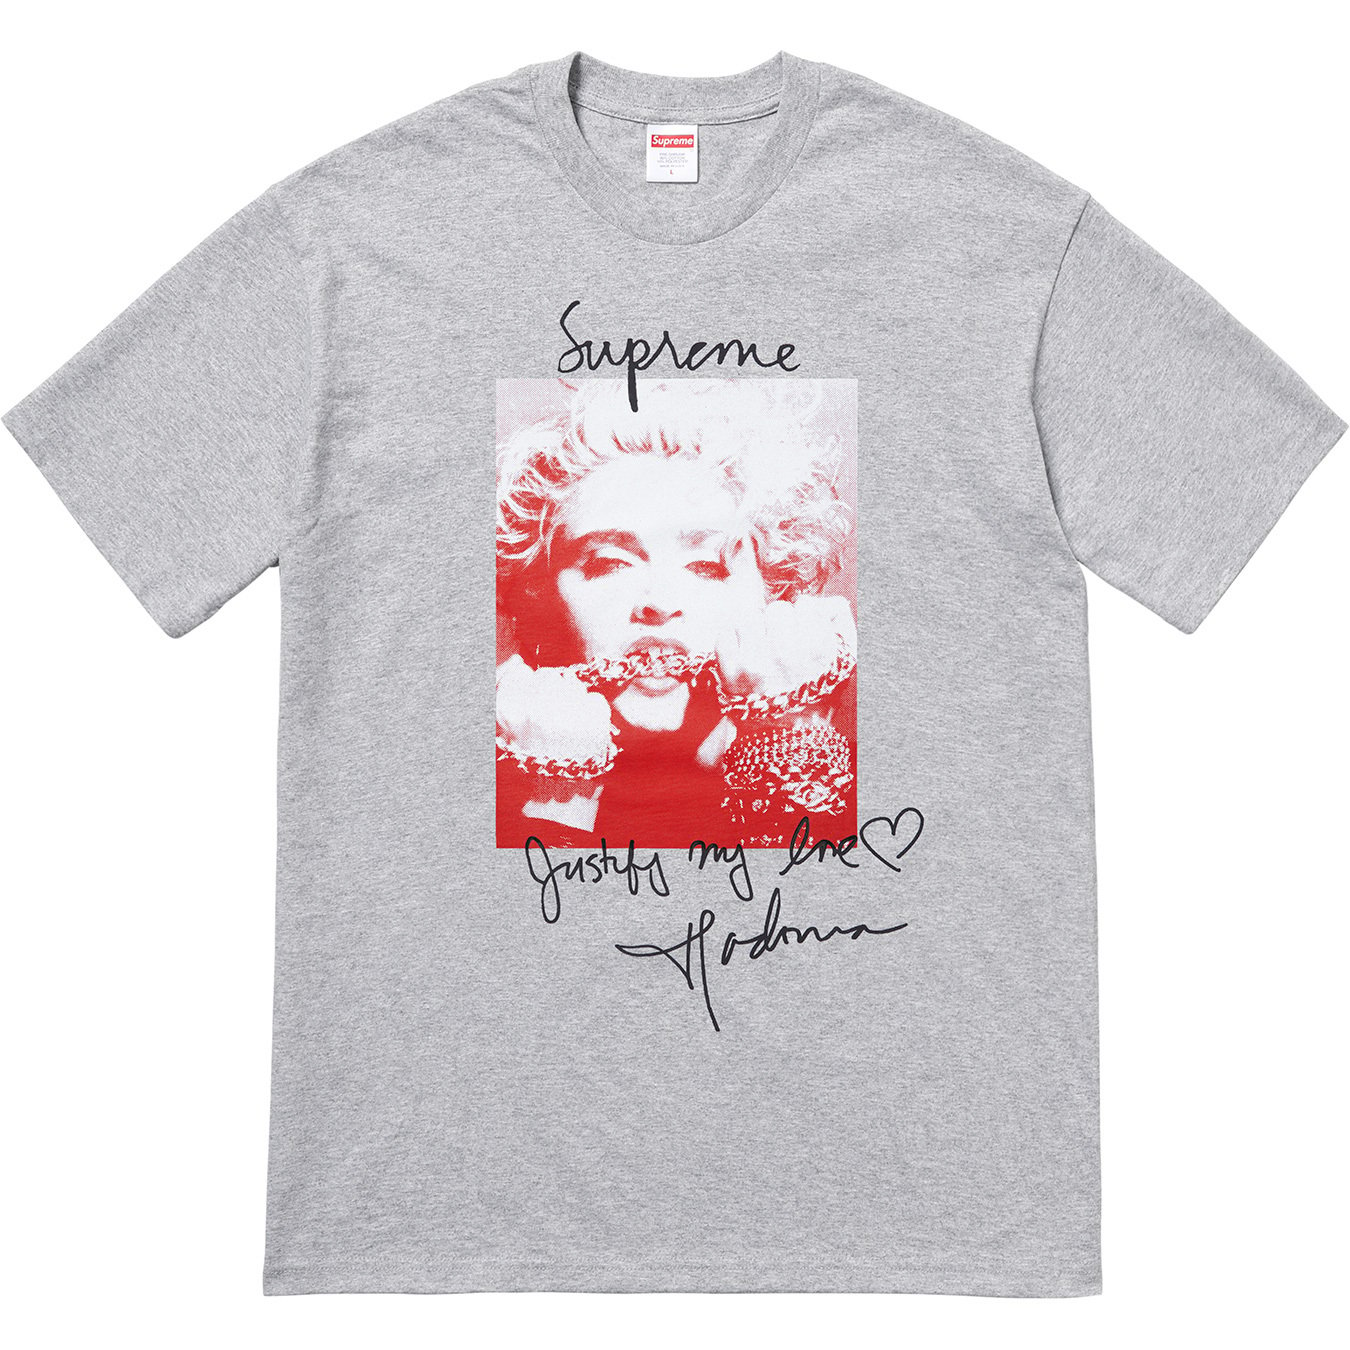 Madonna Tee - fall winter 2018 - Supreme